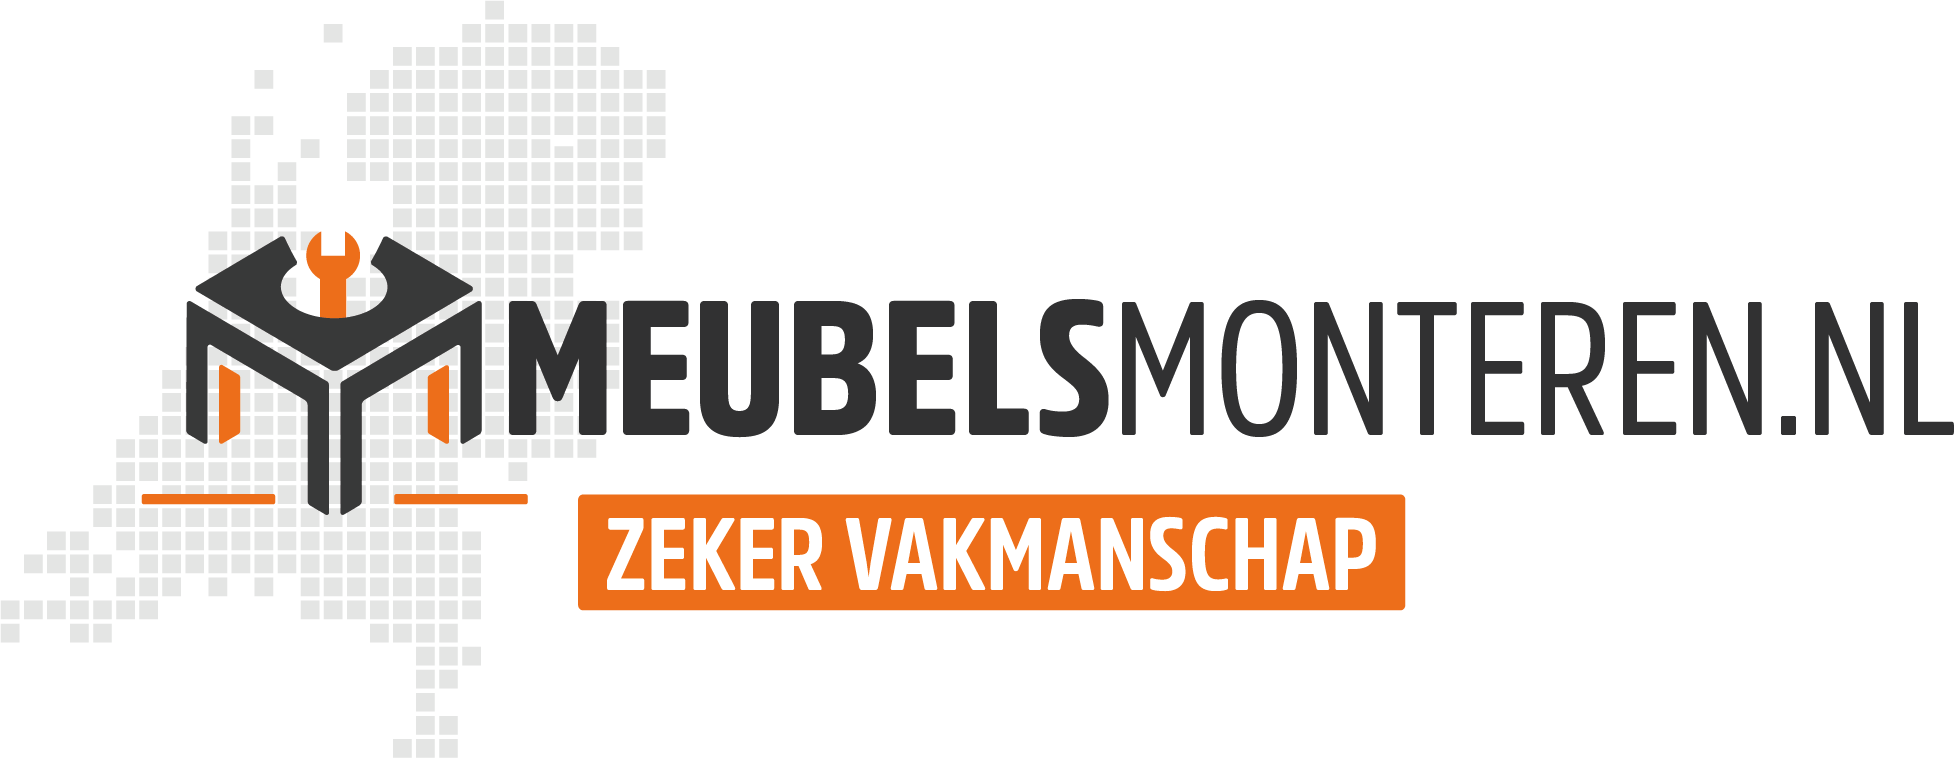 Logo Meubelsmonteren.nl zwart